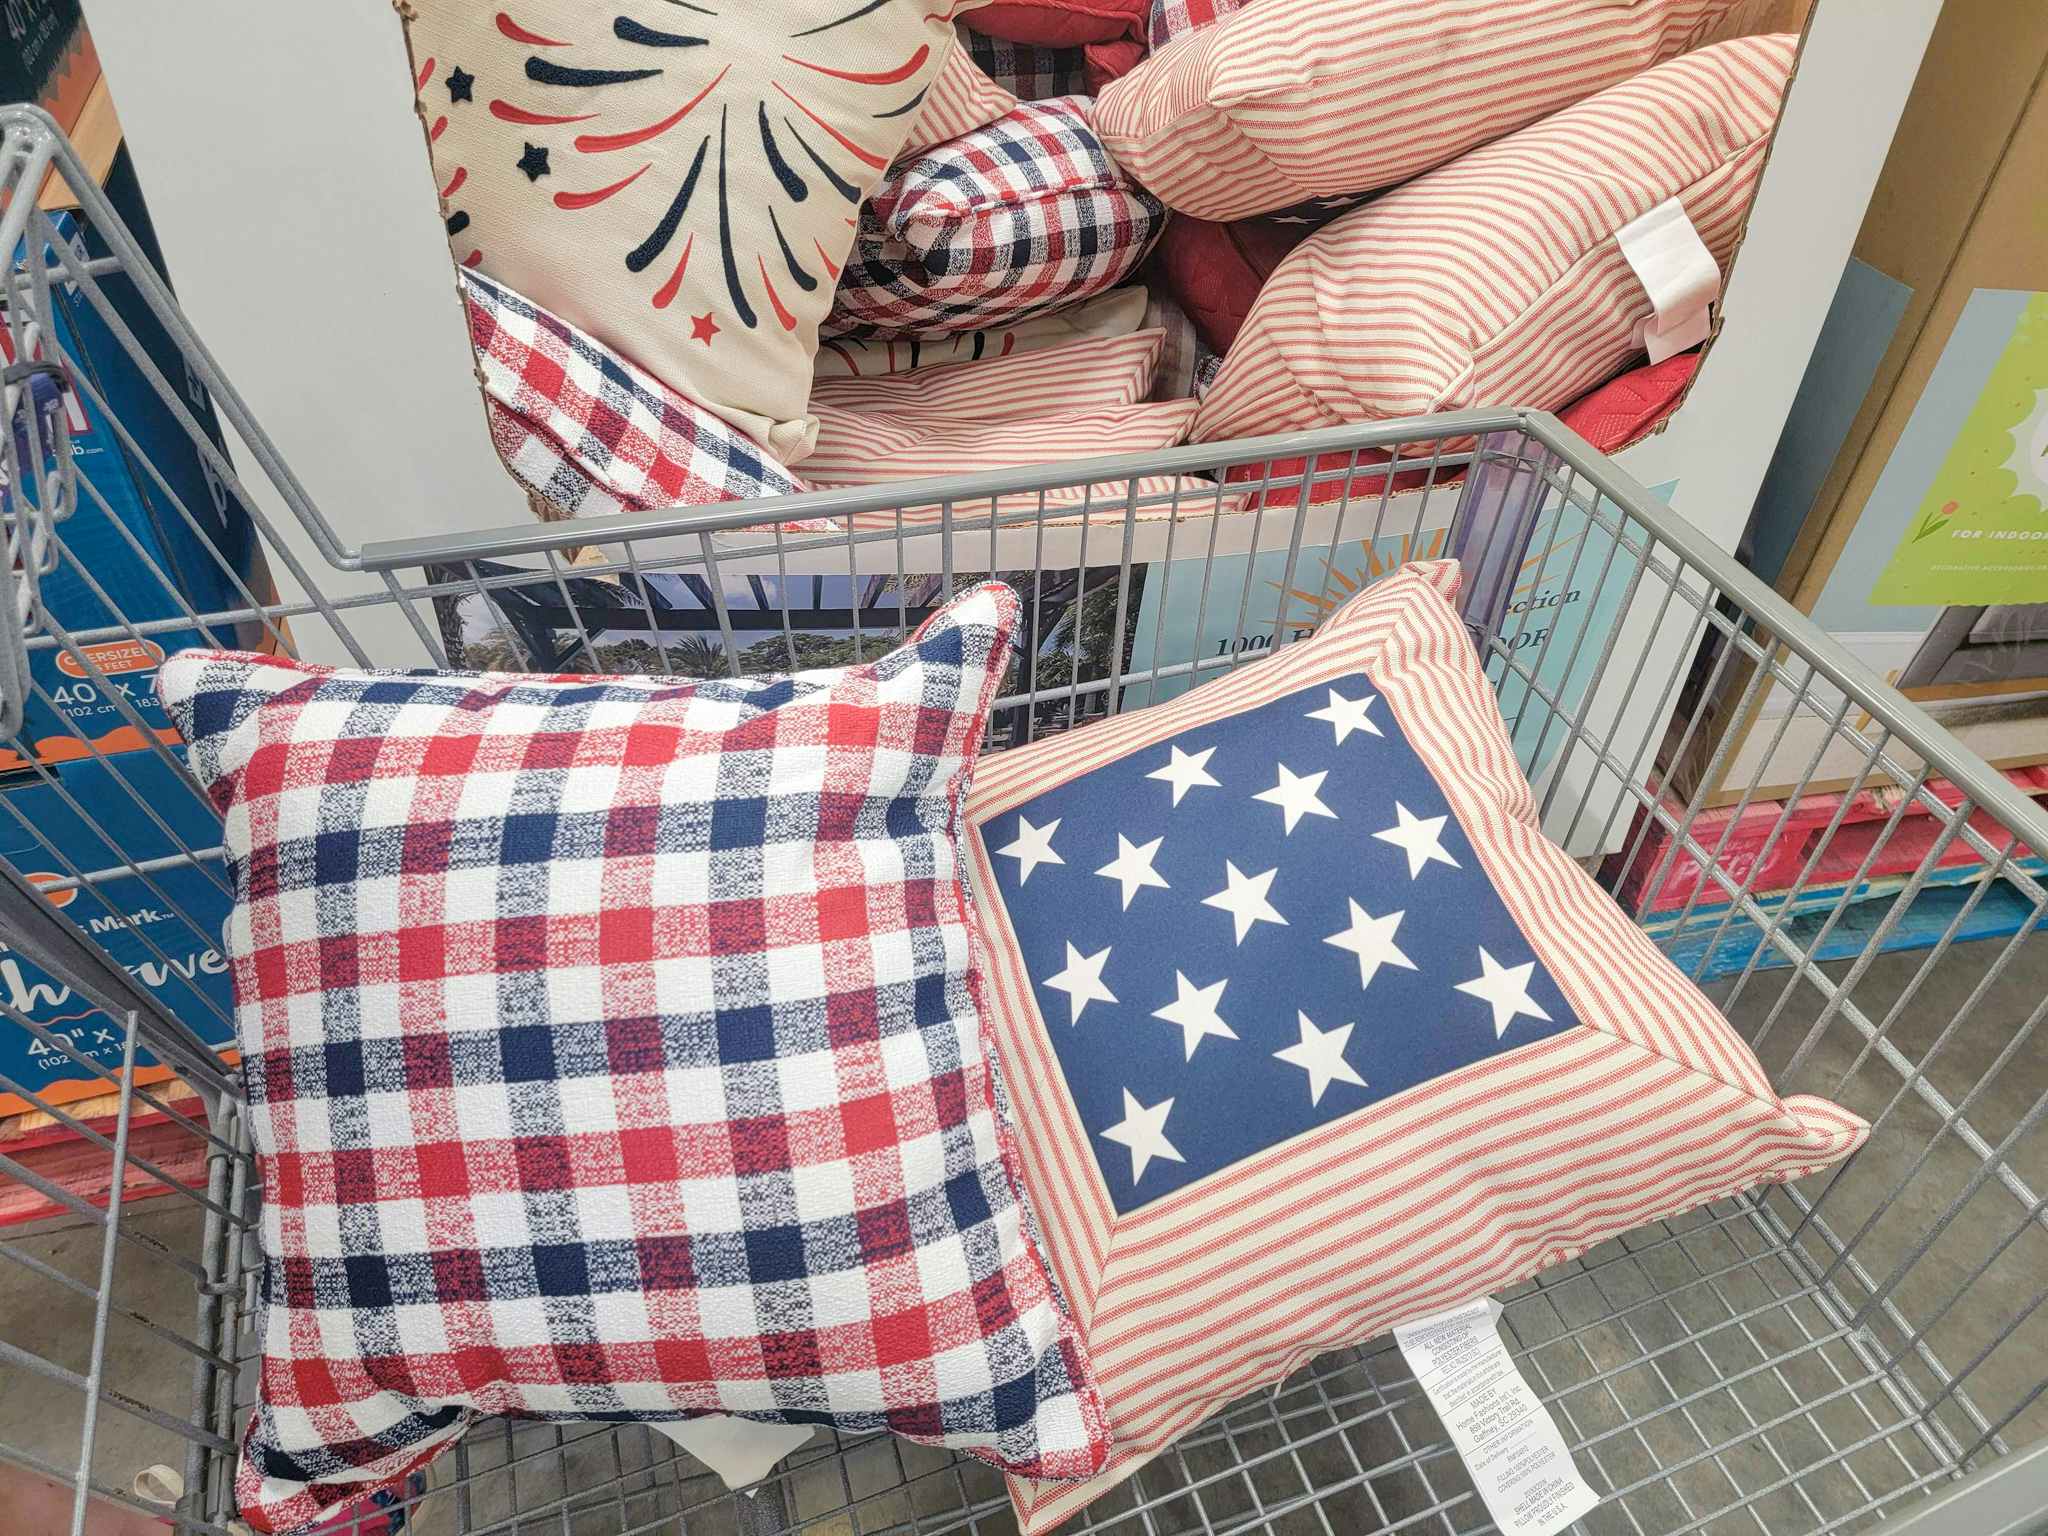 Americana pillows in a cart at Sam's Club